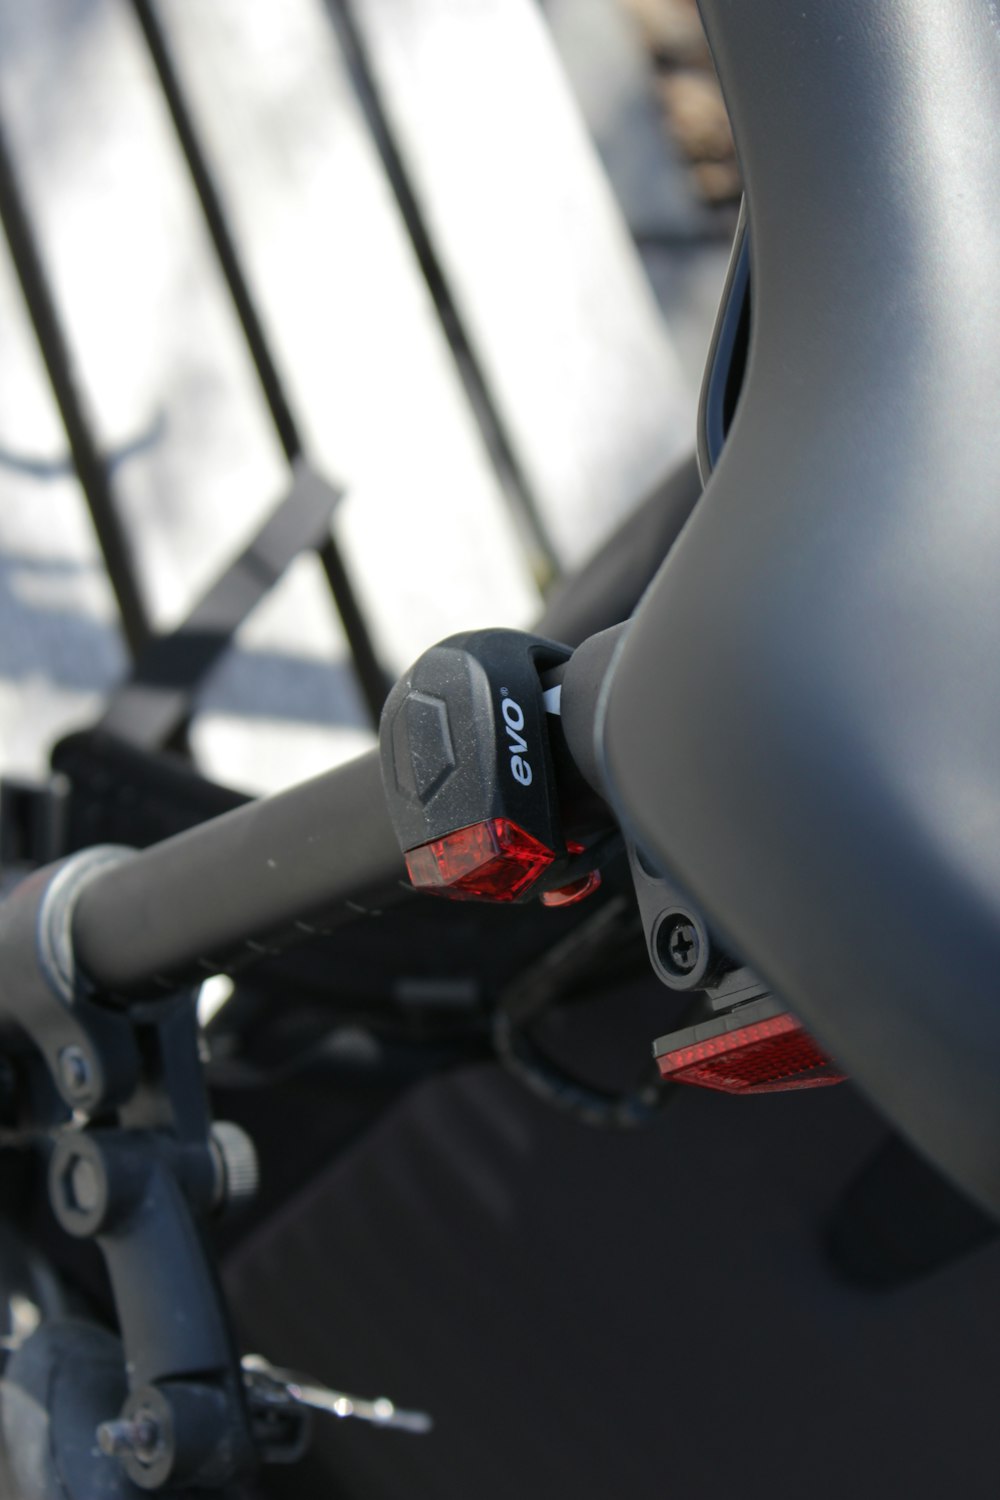 a close up of a bicycle handlebars